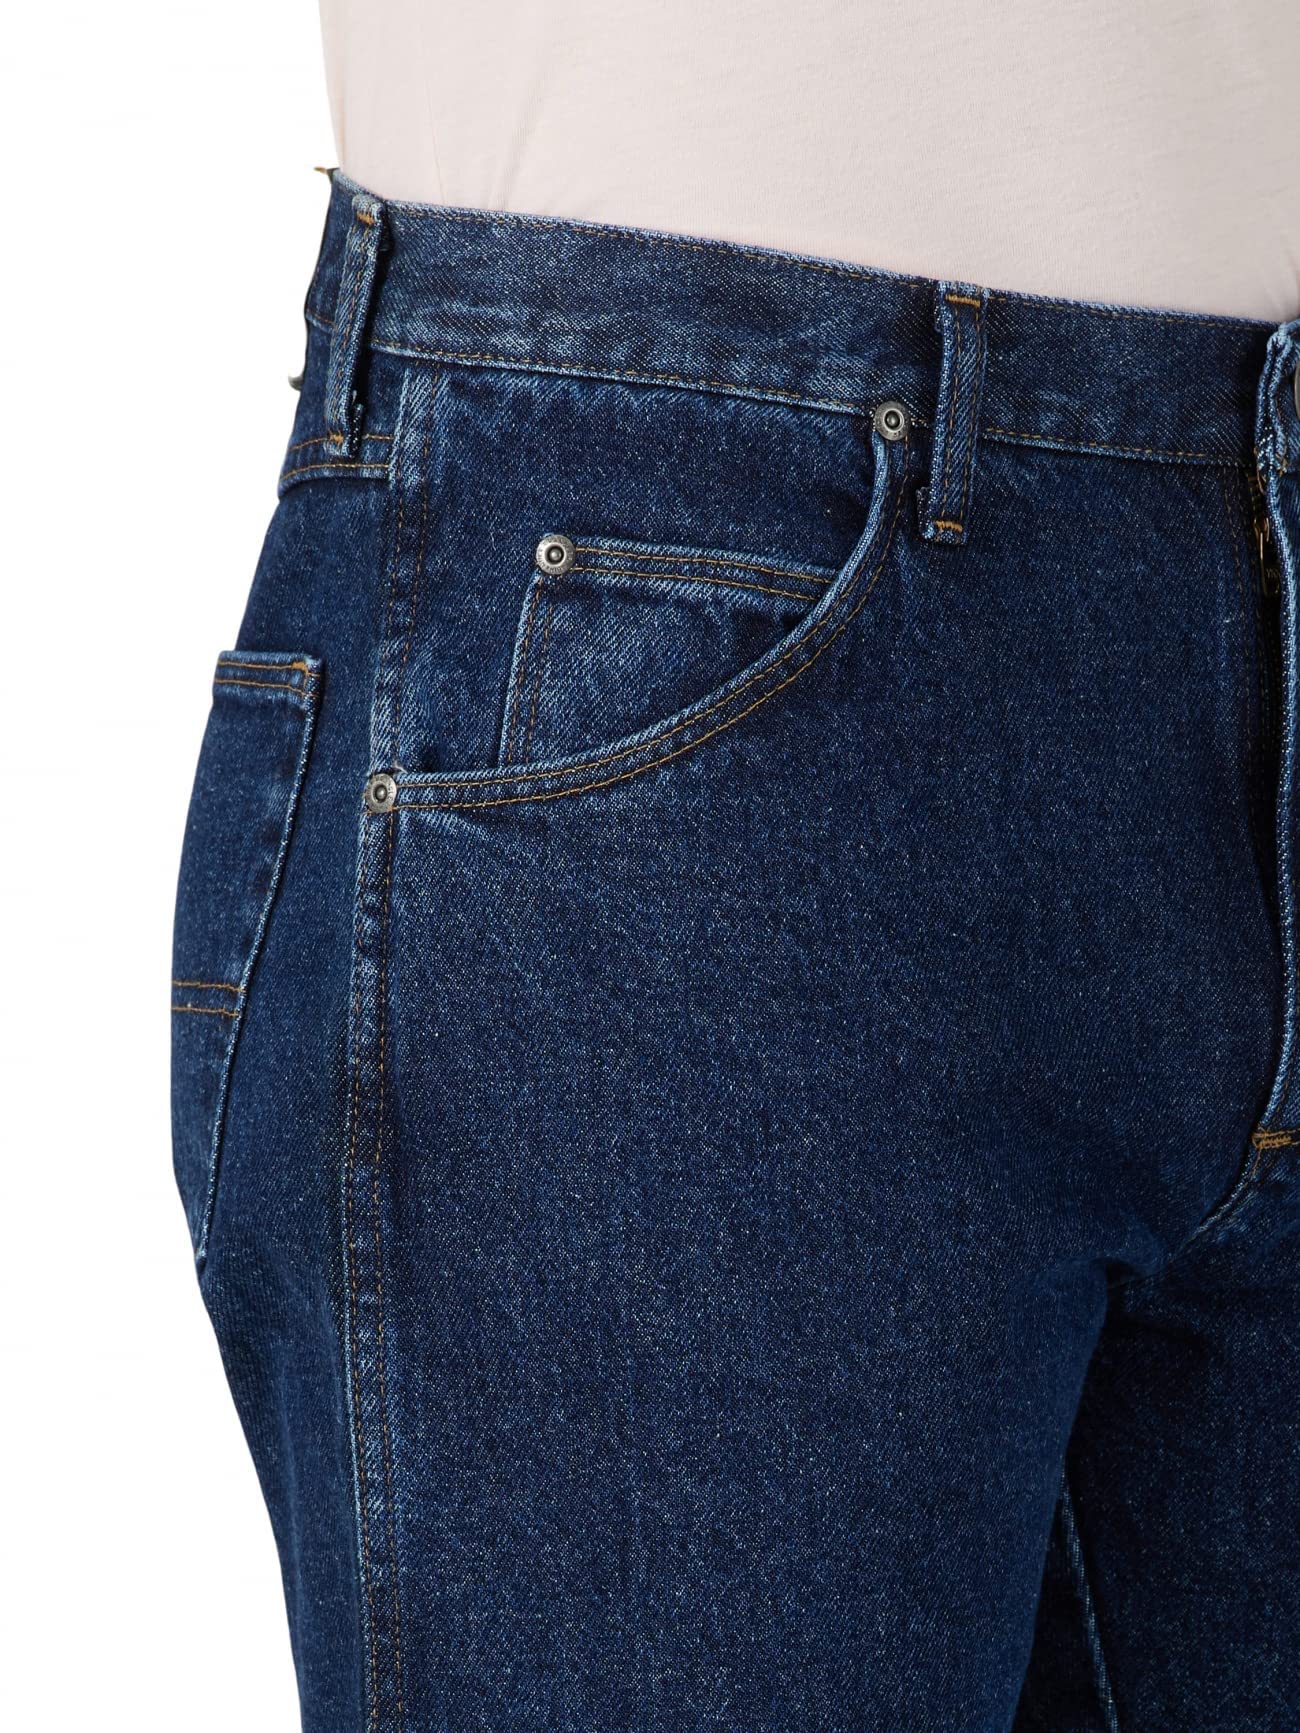 Wrangler Authentics Men's Classic 5-Pocket Regular Fit Cotton Jean, Dark Rinse, 33W x 30L